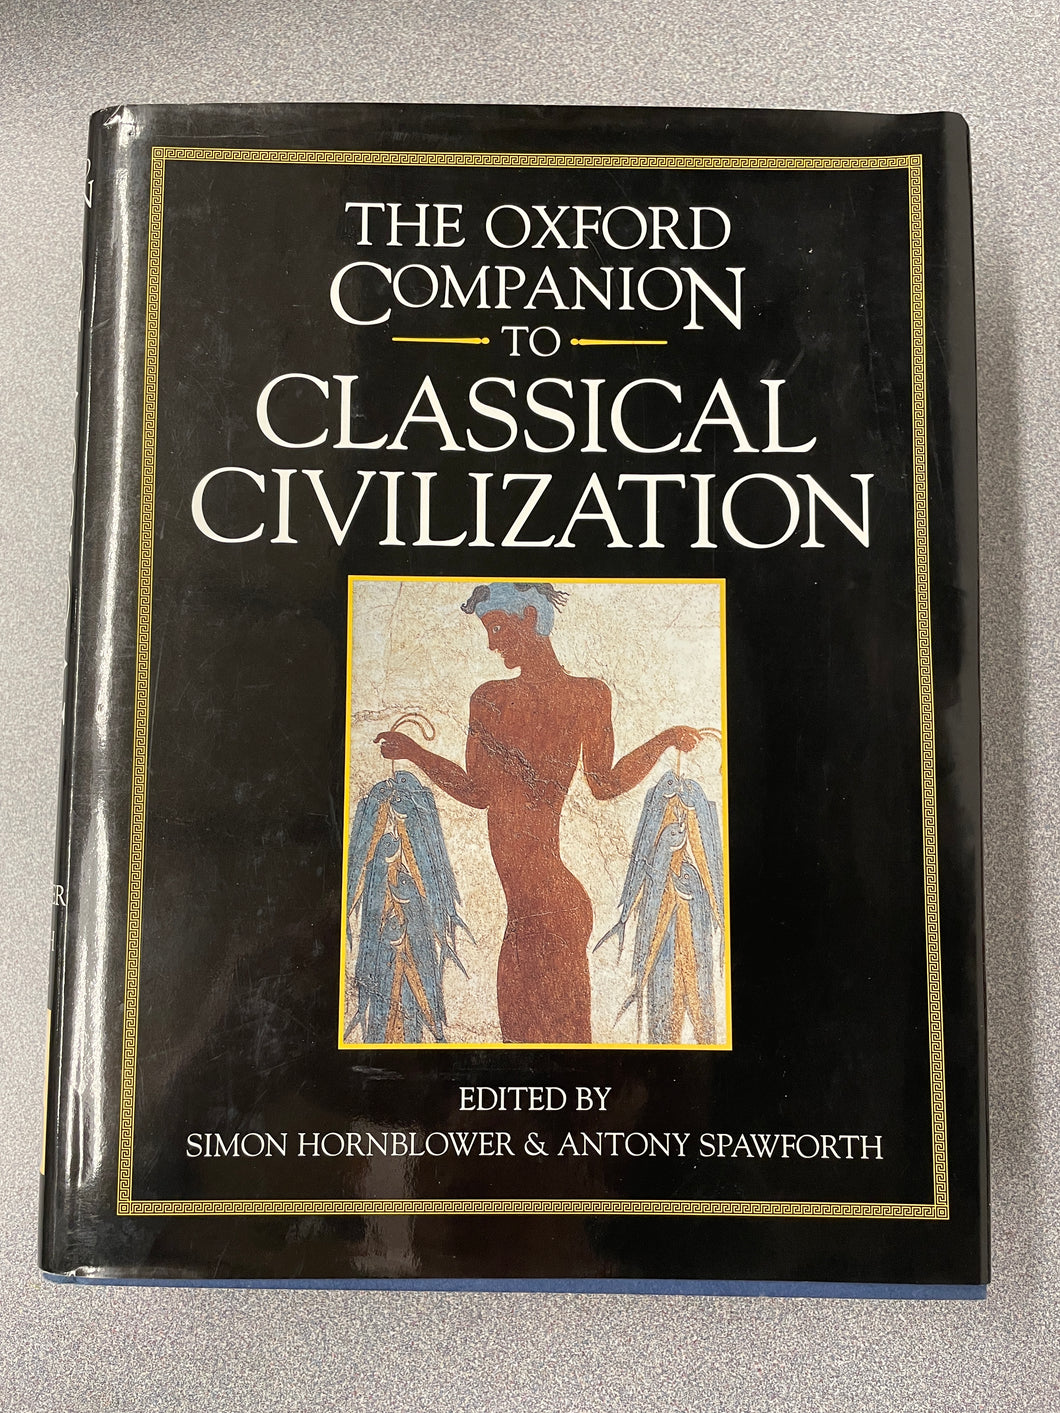 H  The Oxford Companion to Classical Civilization, Hornblower, Simon, ed. [1998] N 3/24